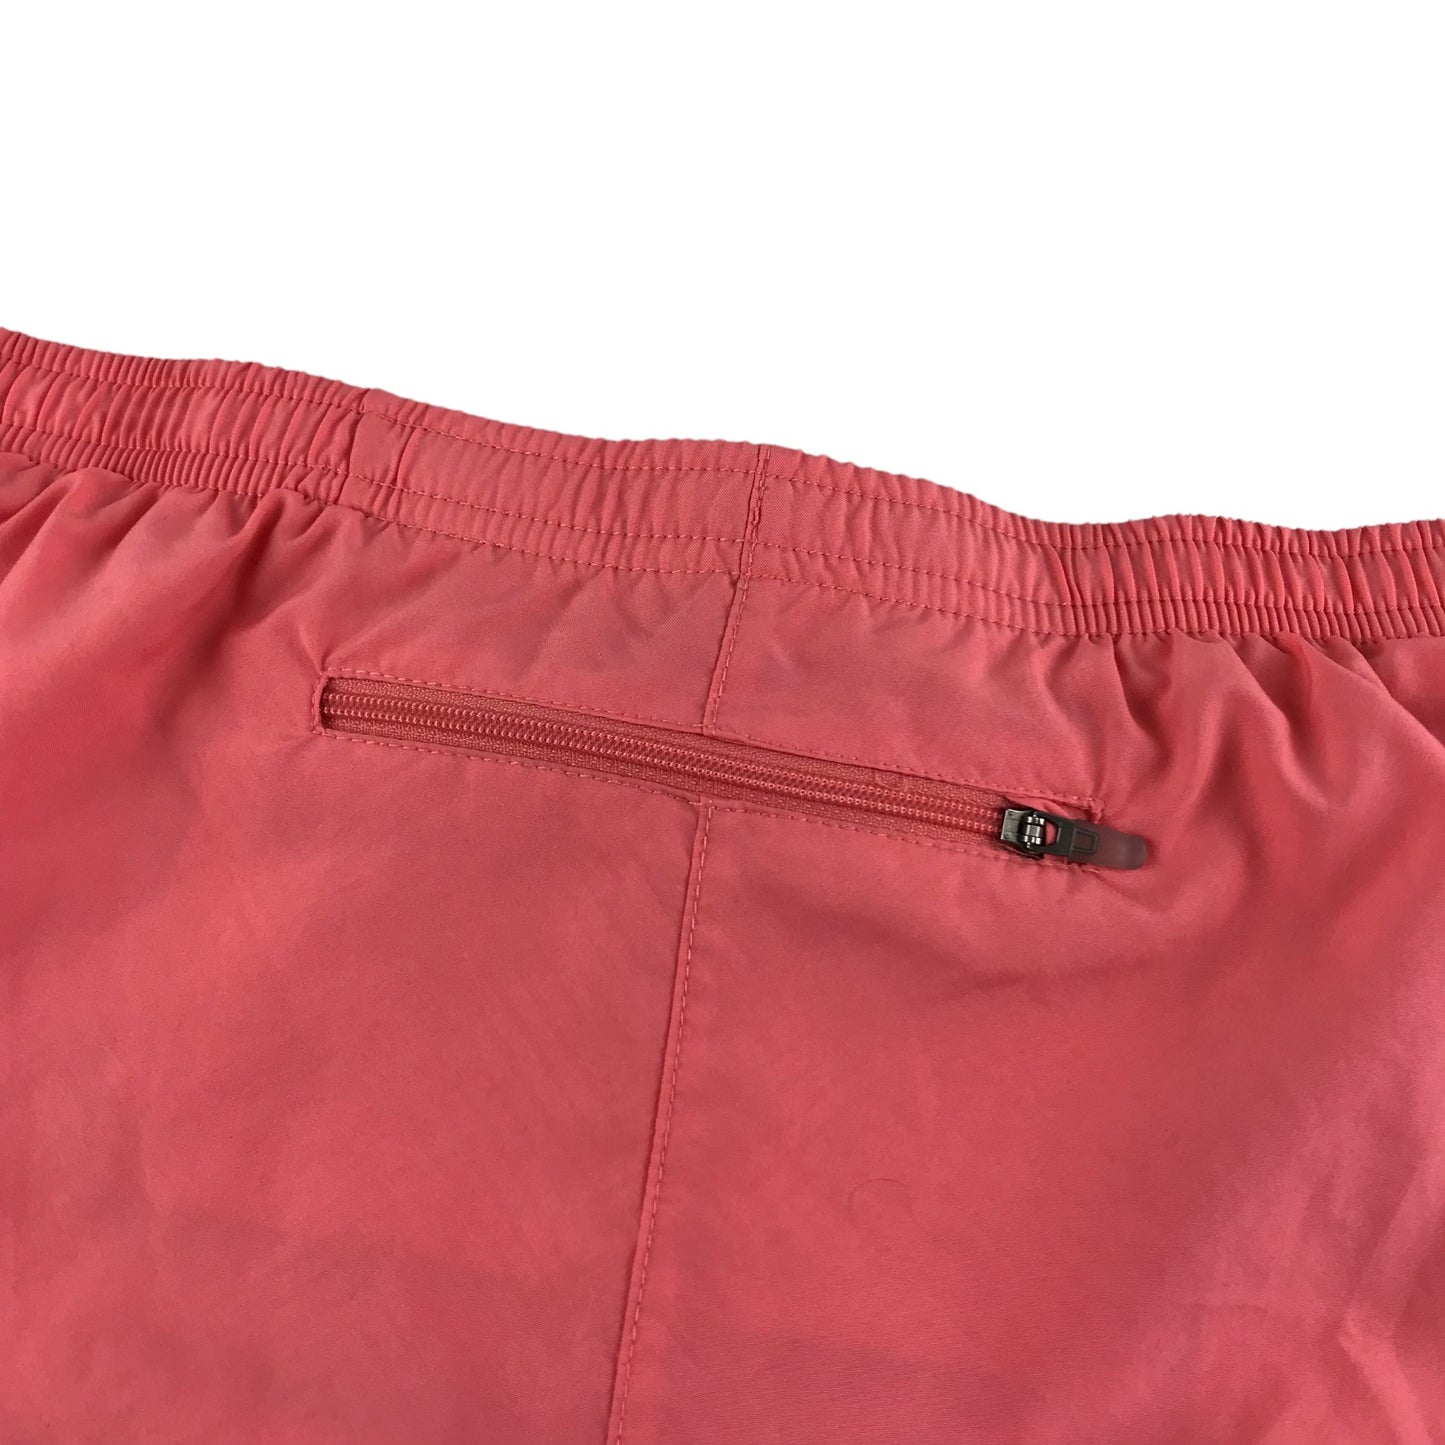 Nike Sport Shorts Adult Size Medium Peachy Pink Dri-Fit